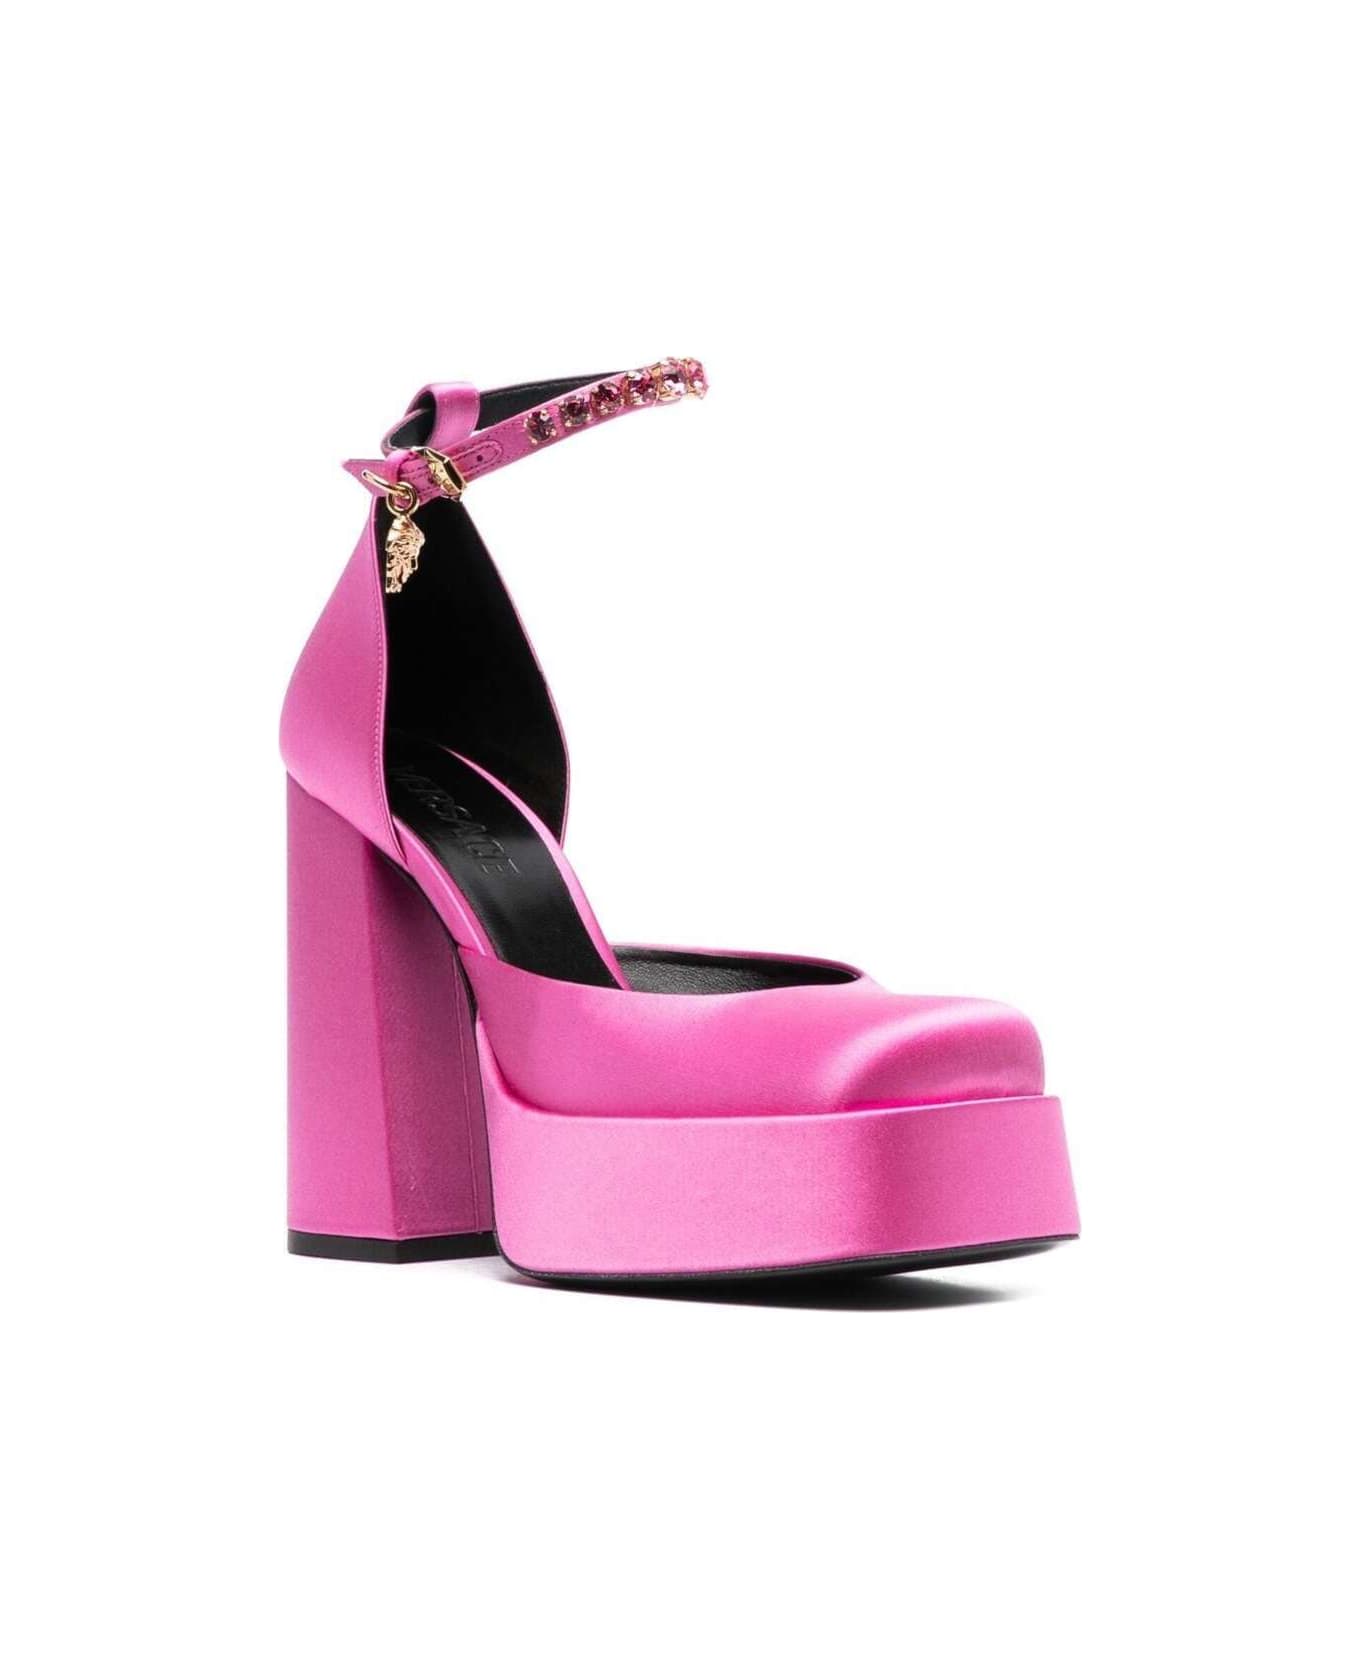 Versace Woman's Pink Satin Pumps - Pink